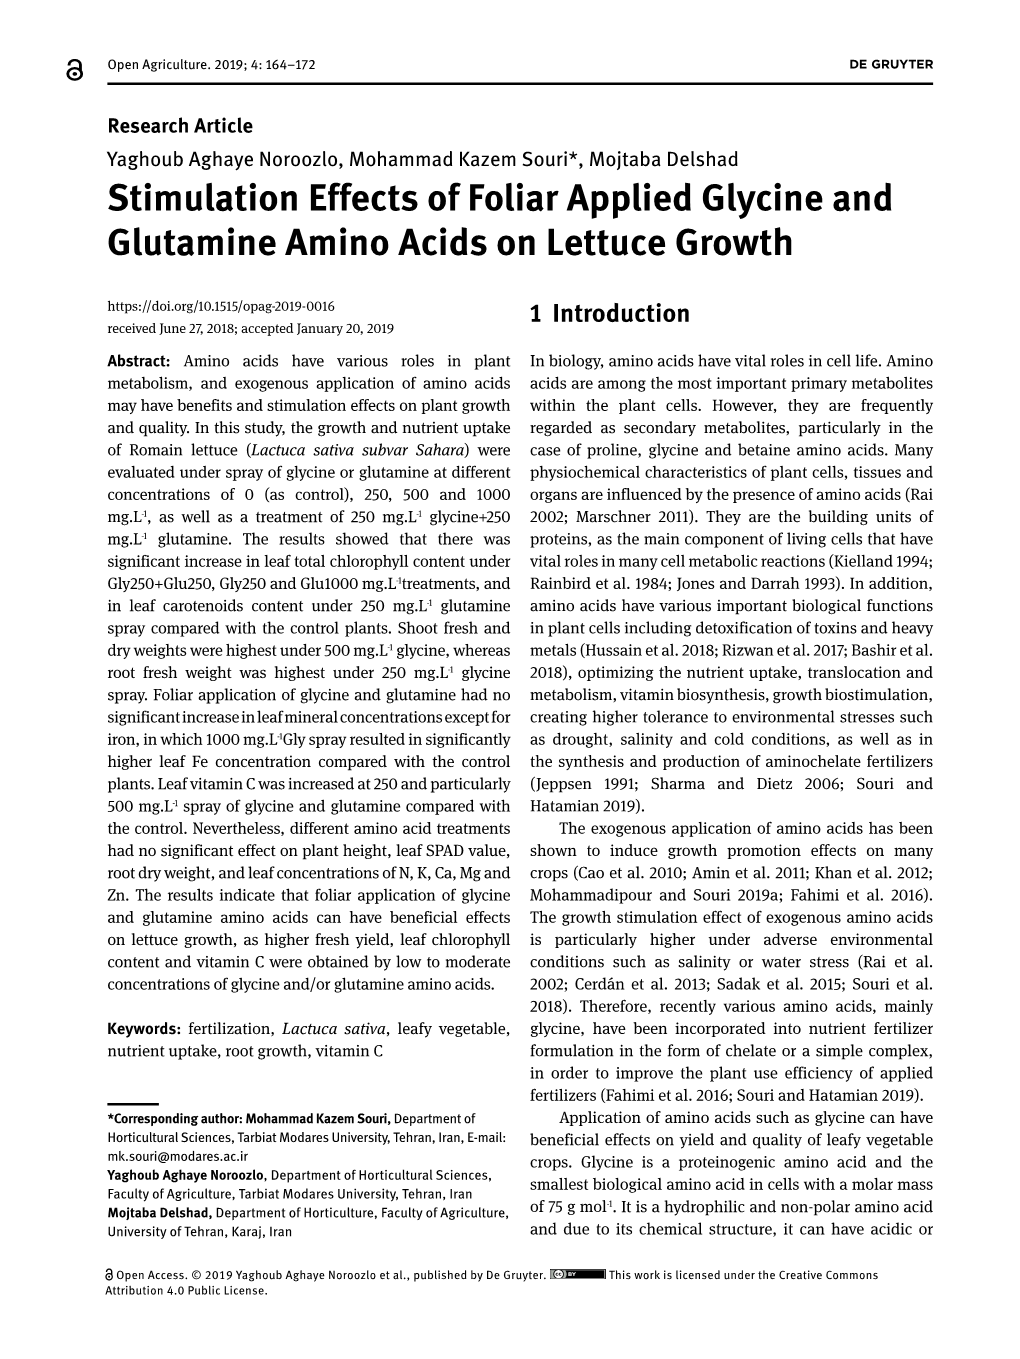 Stimulation Effects of Foliar Applied Glycine and Glutamine Amino Acids